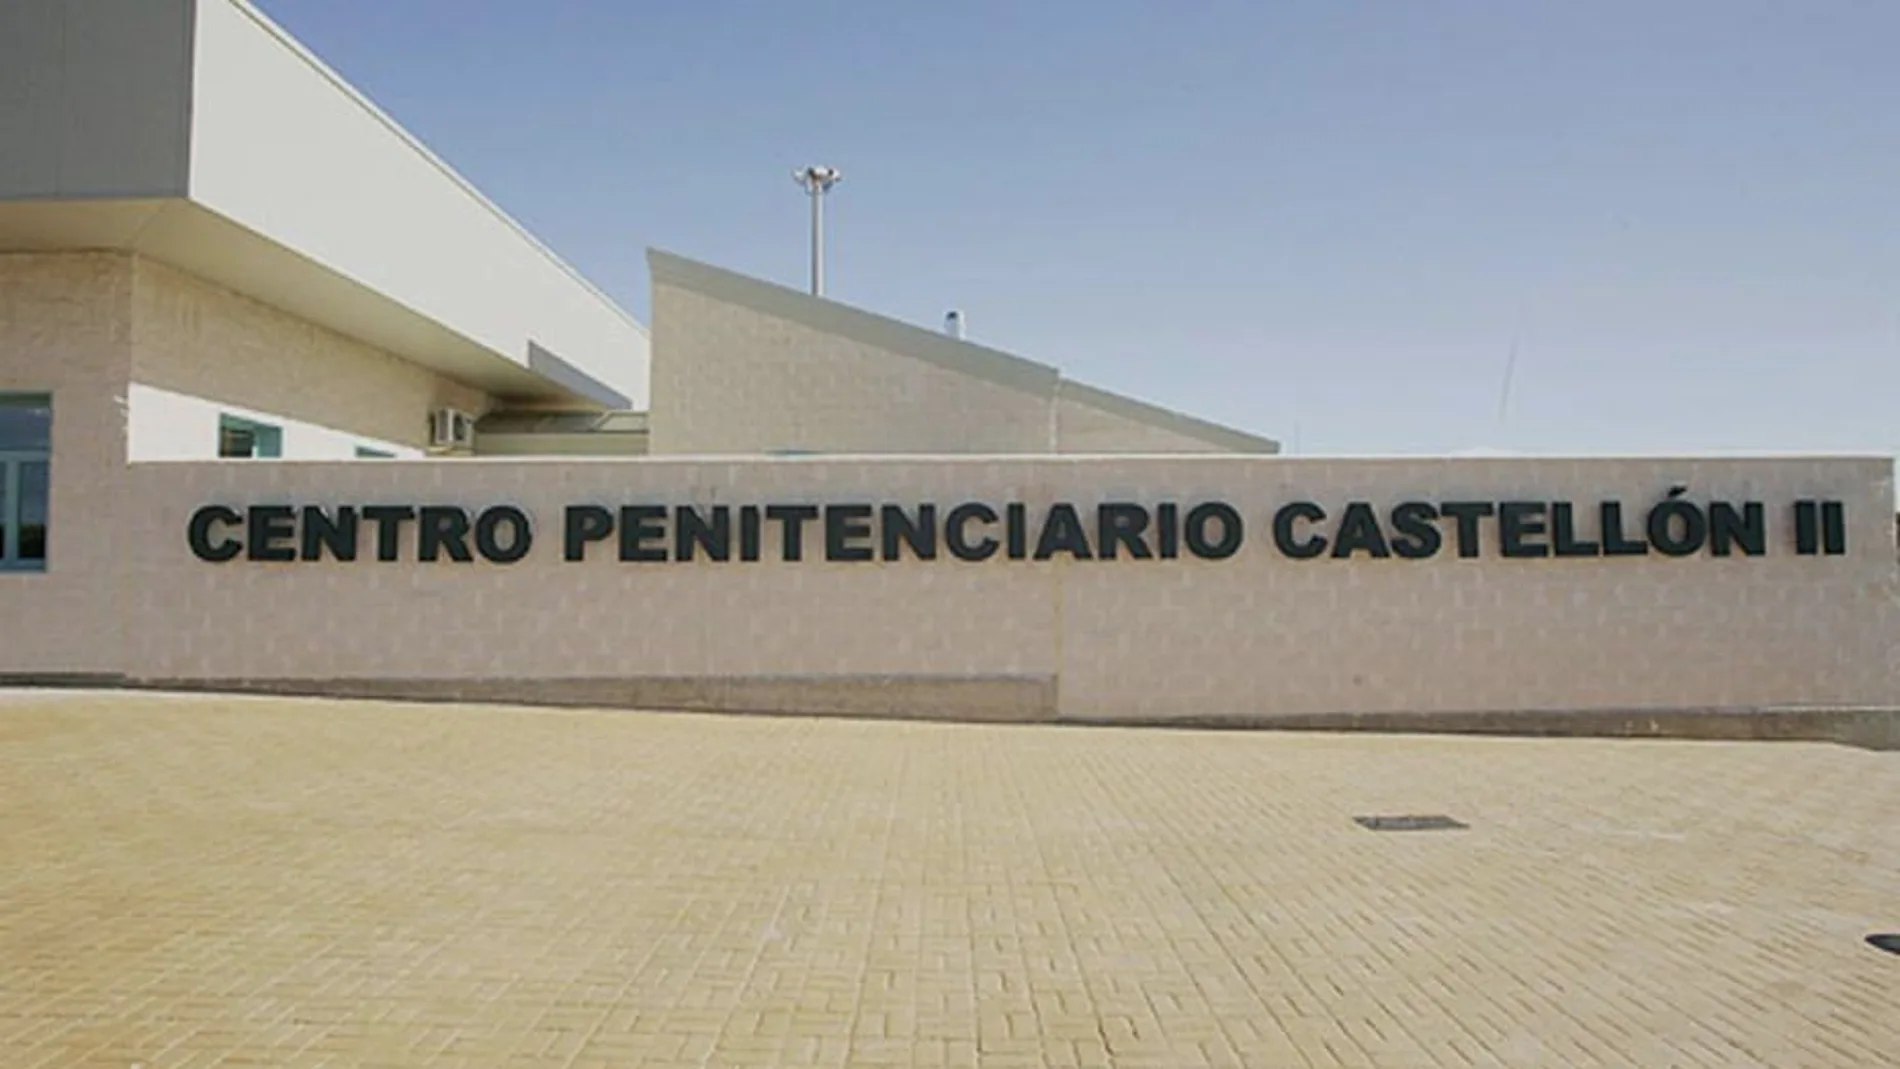 Centro penitenciario Castelló 2 en Albocàsser